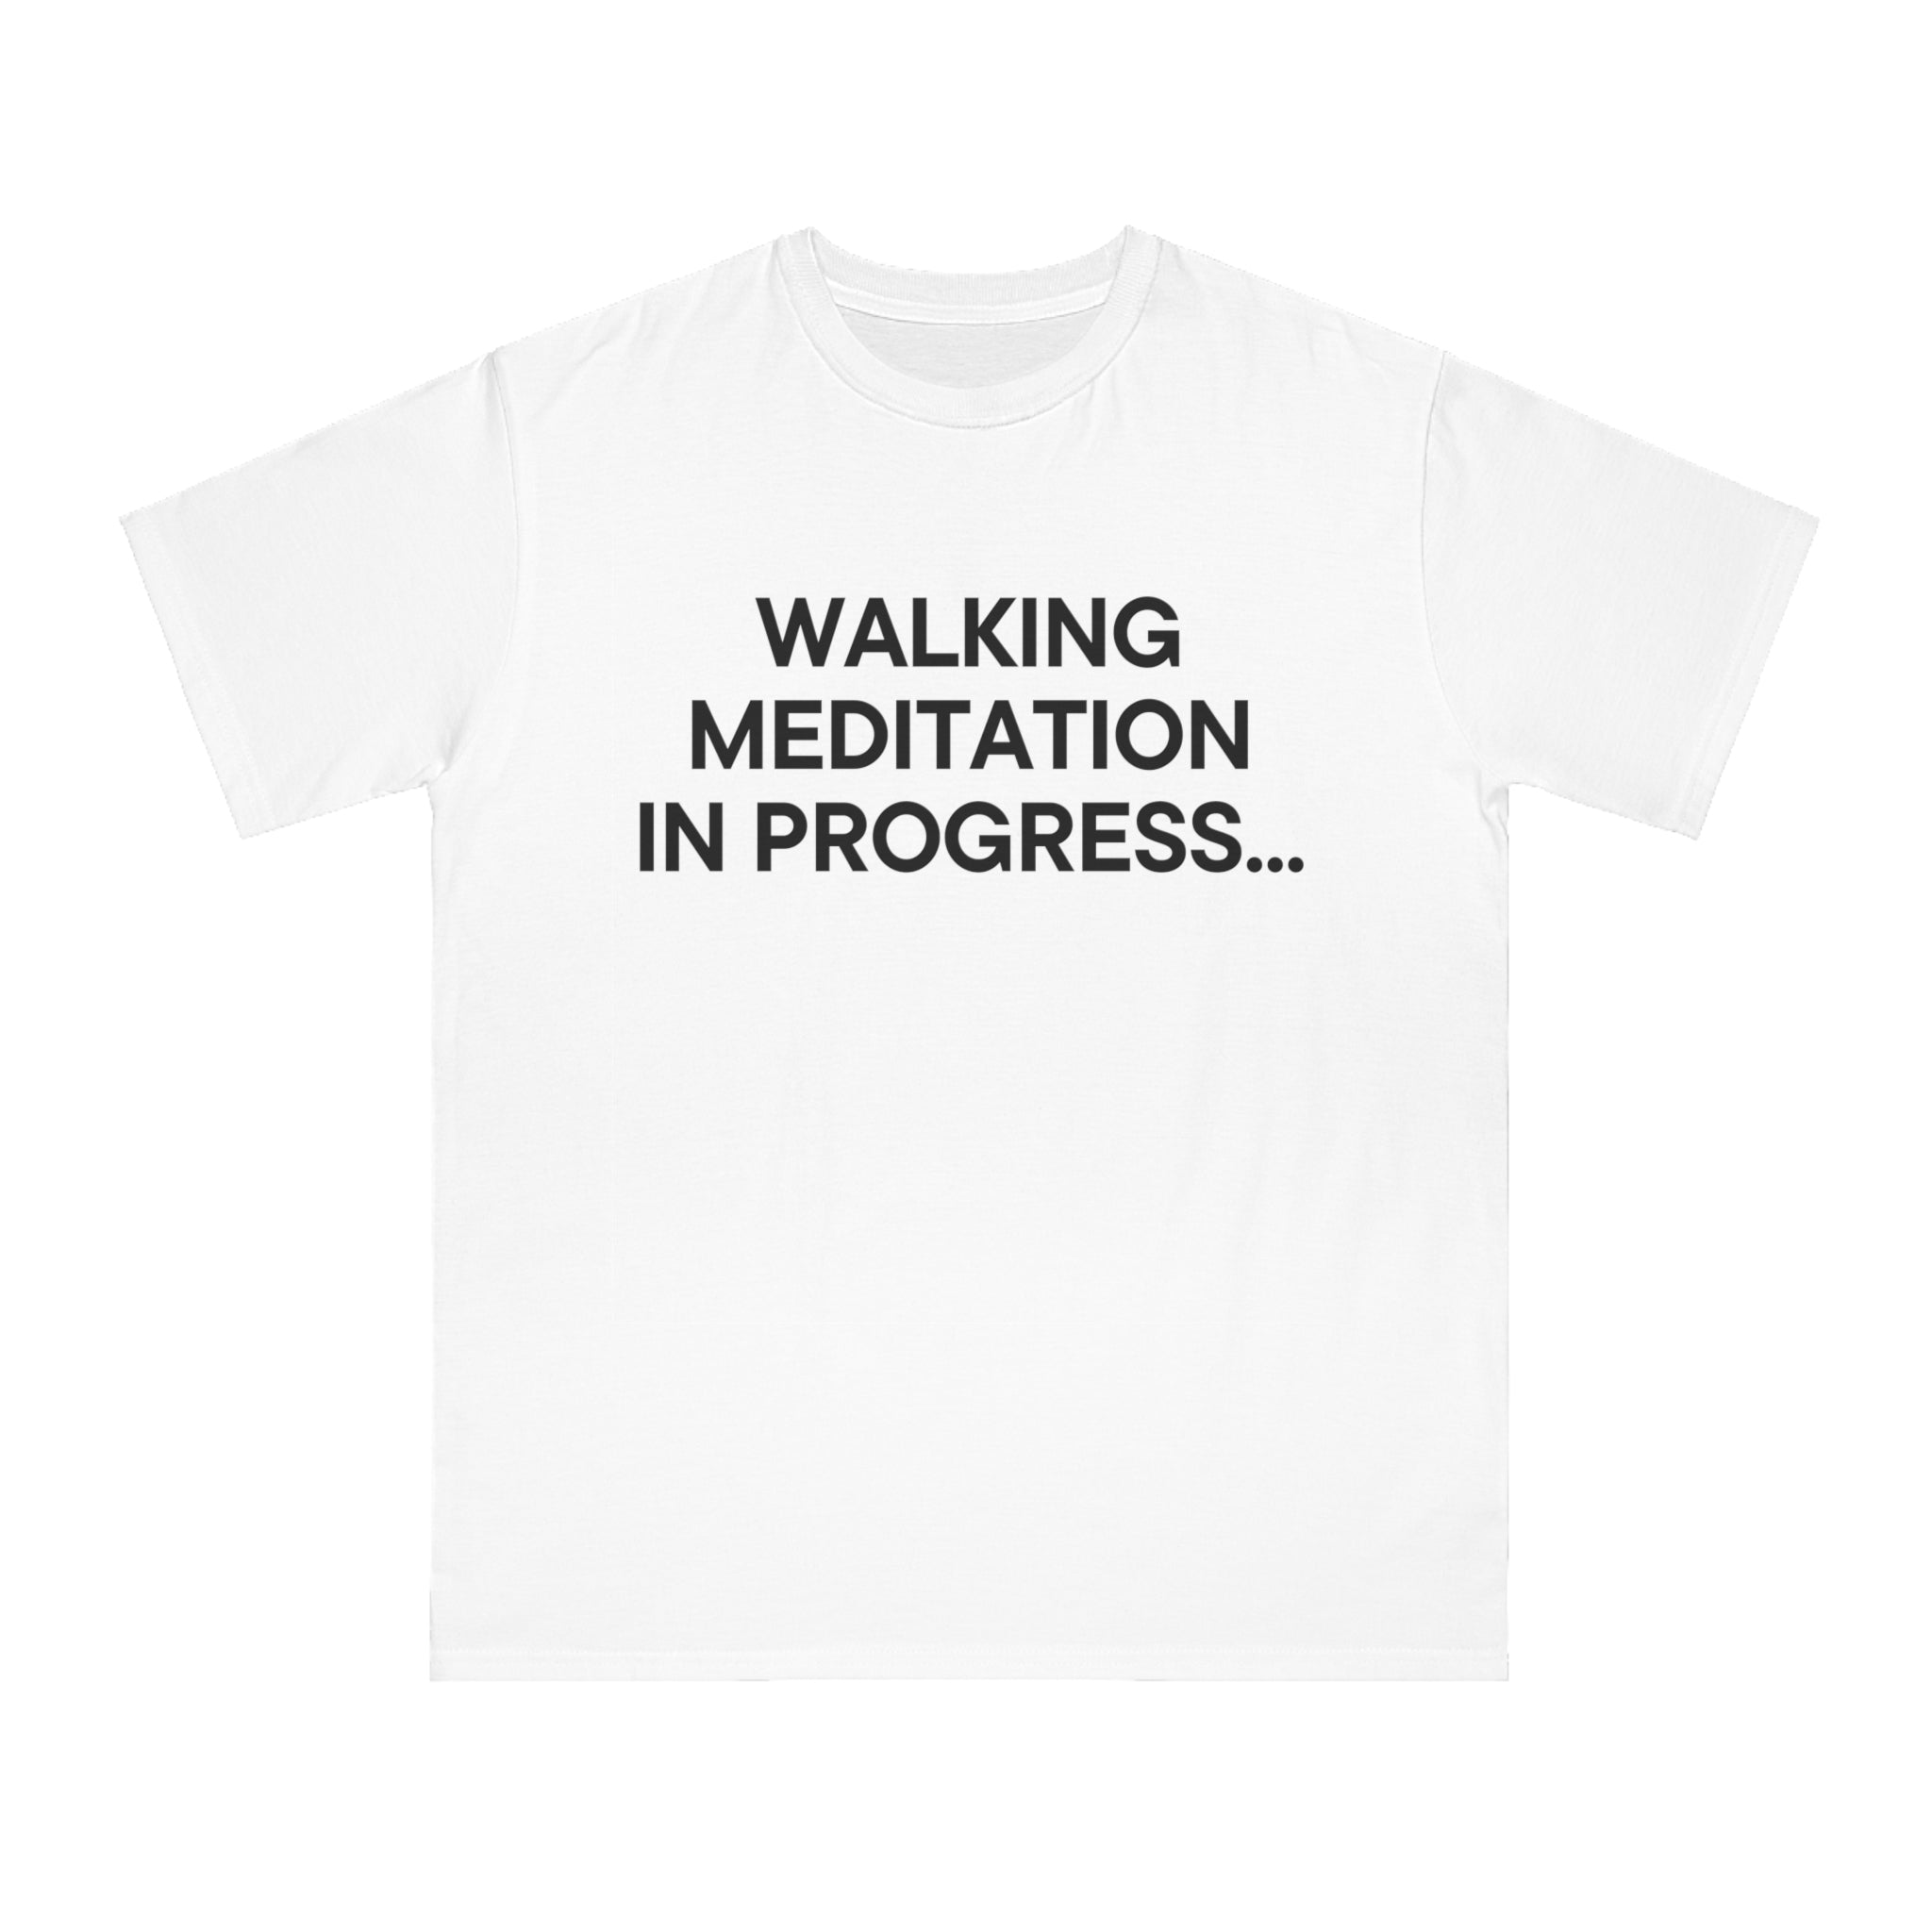 WALKING MEDITATION IN PROGRESS T-SHIRT WHITE 100% ORGANIC